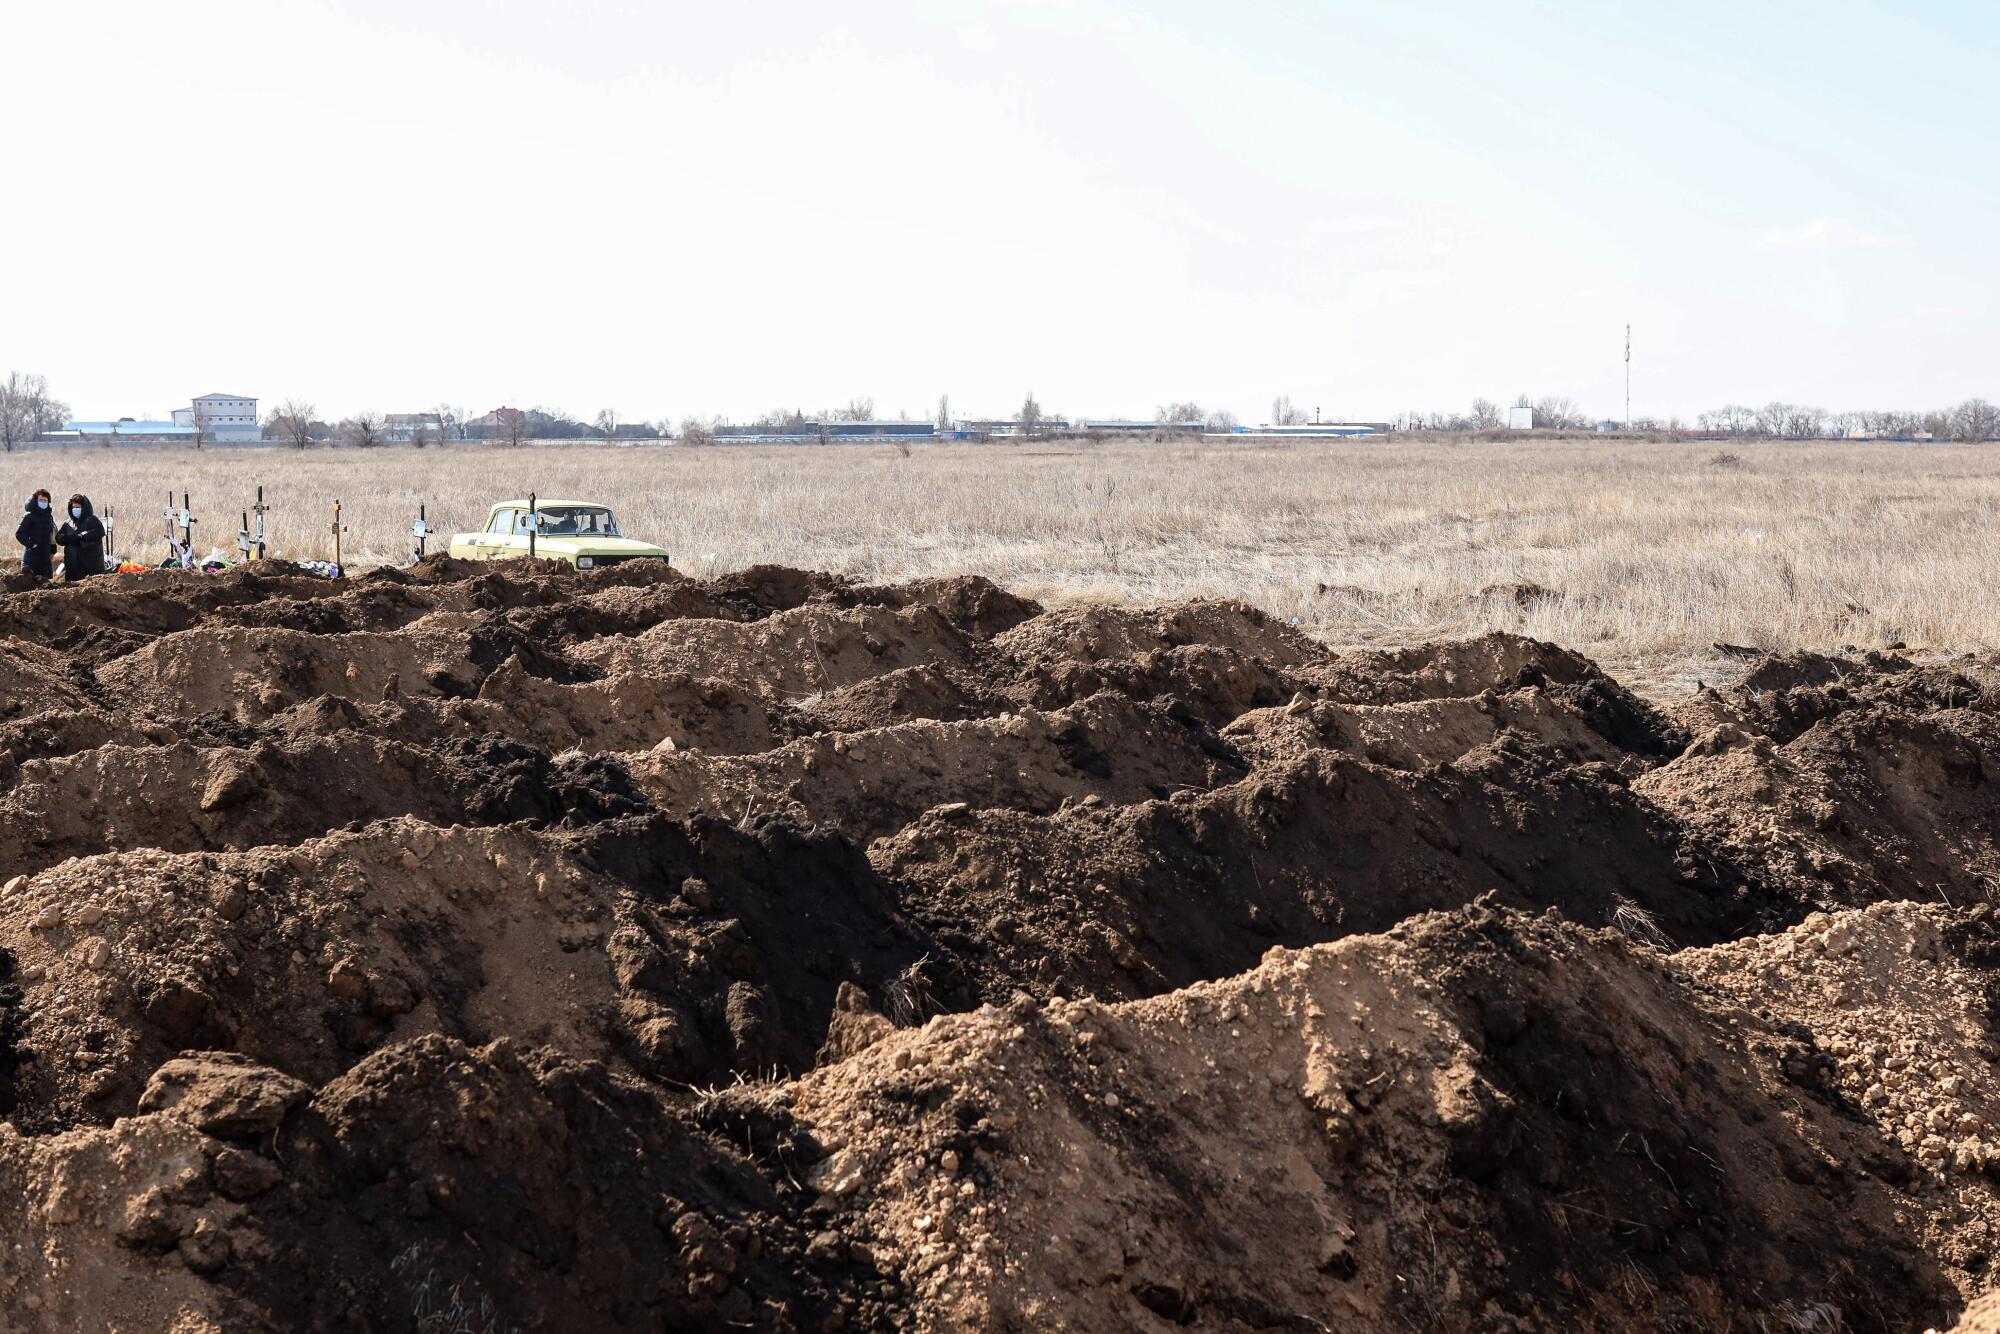 Mounds of dirt in a barren field